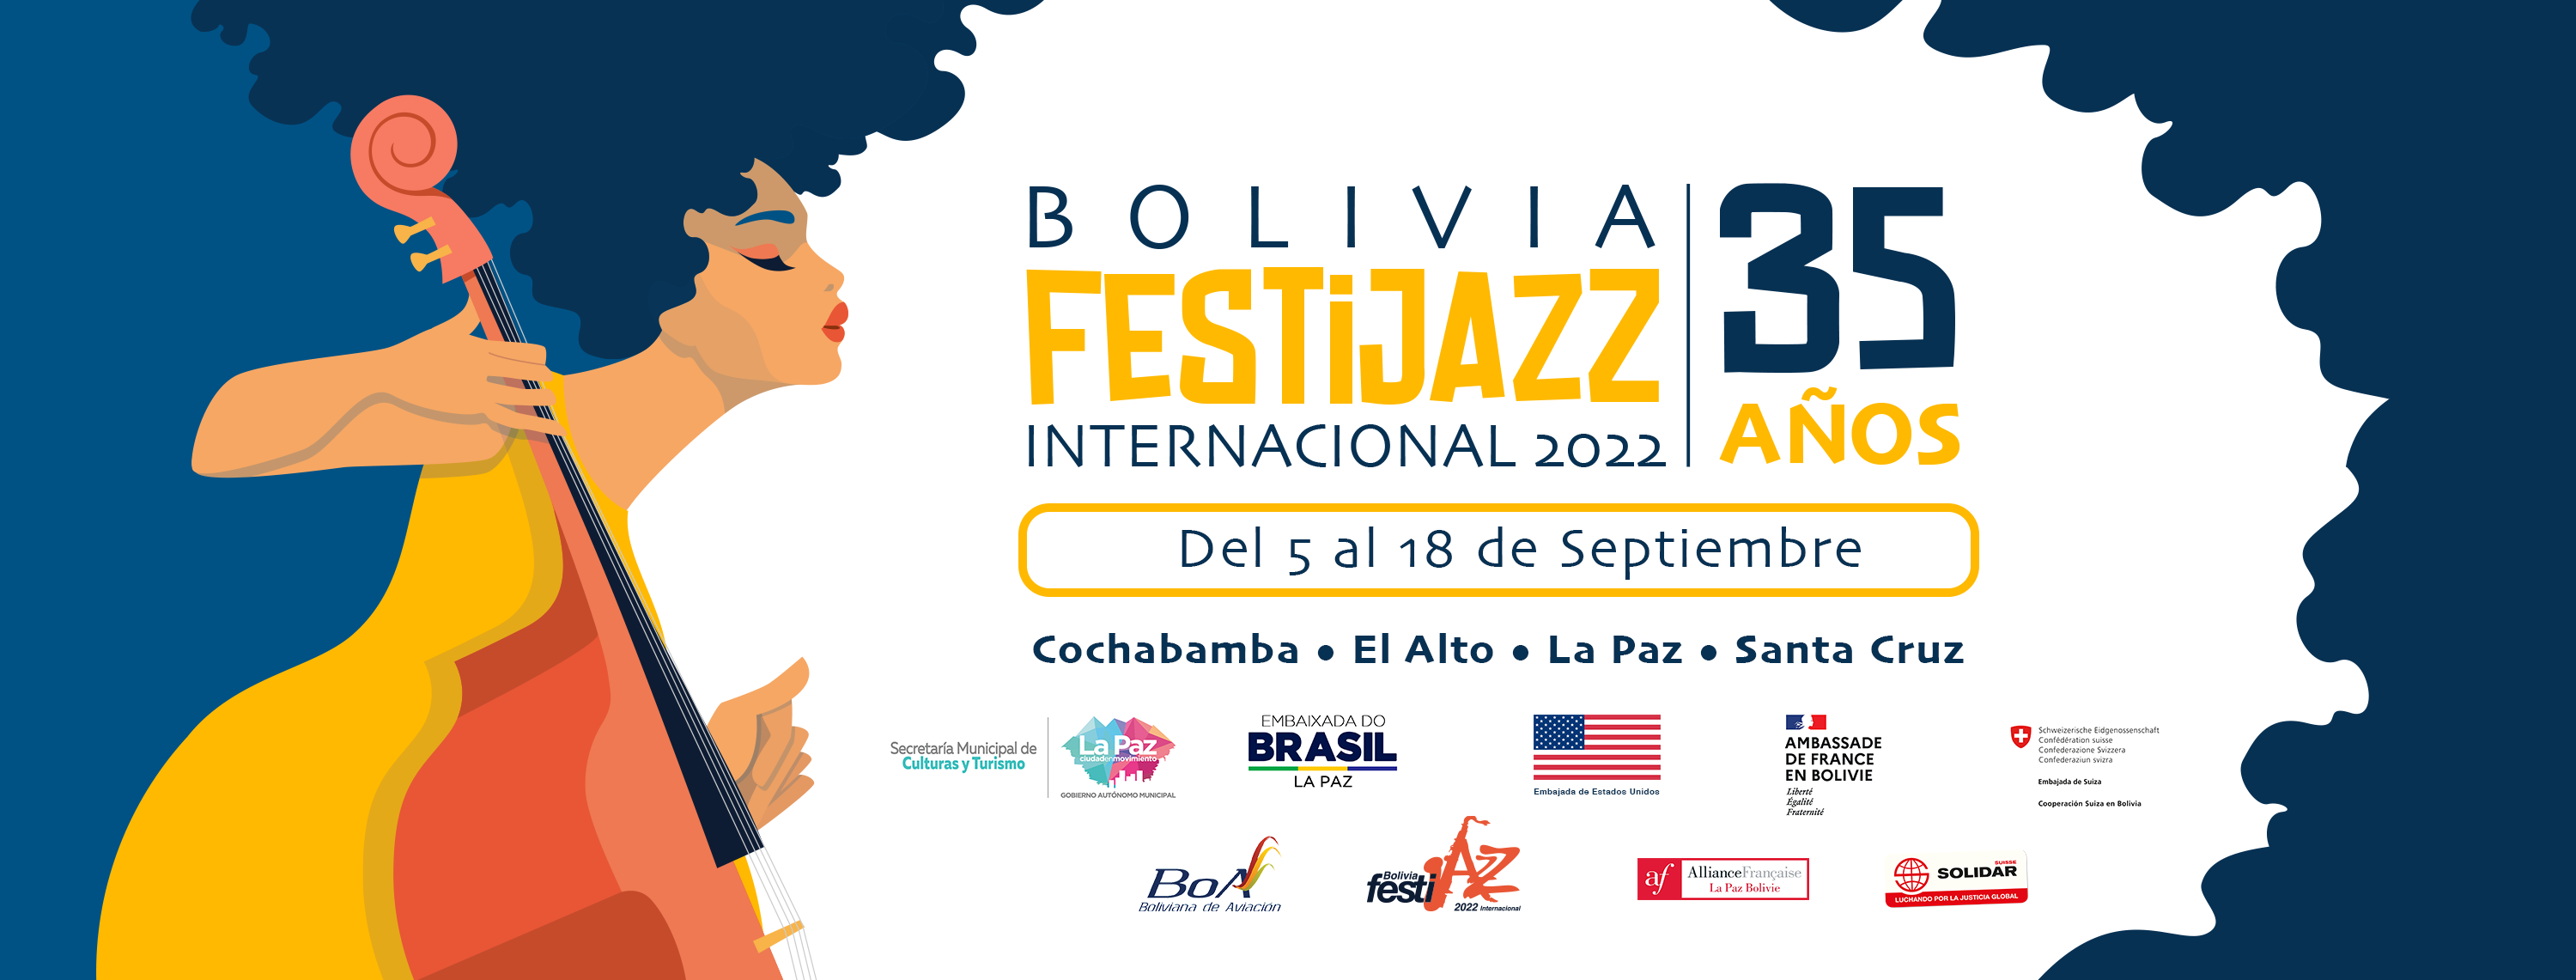 Bolivia-Festijazz-Internacional